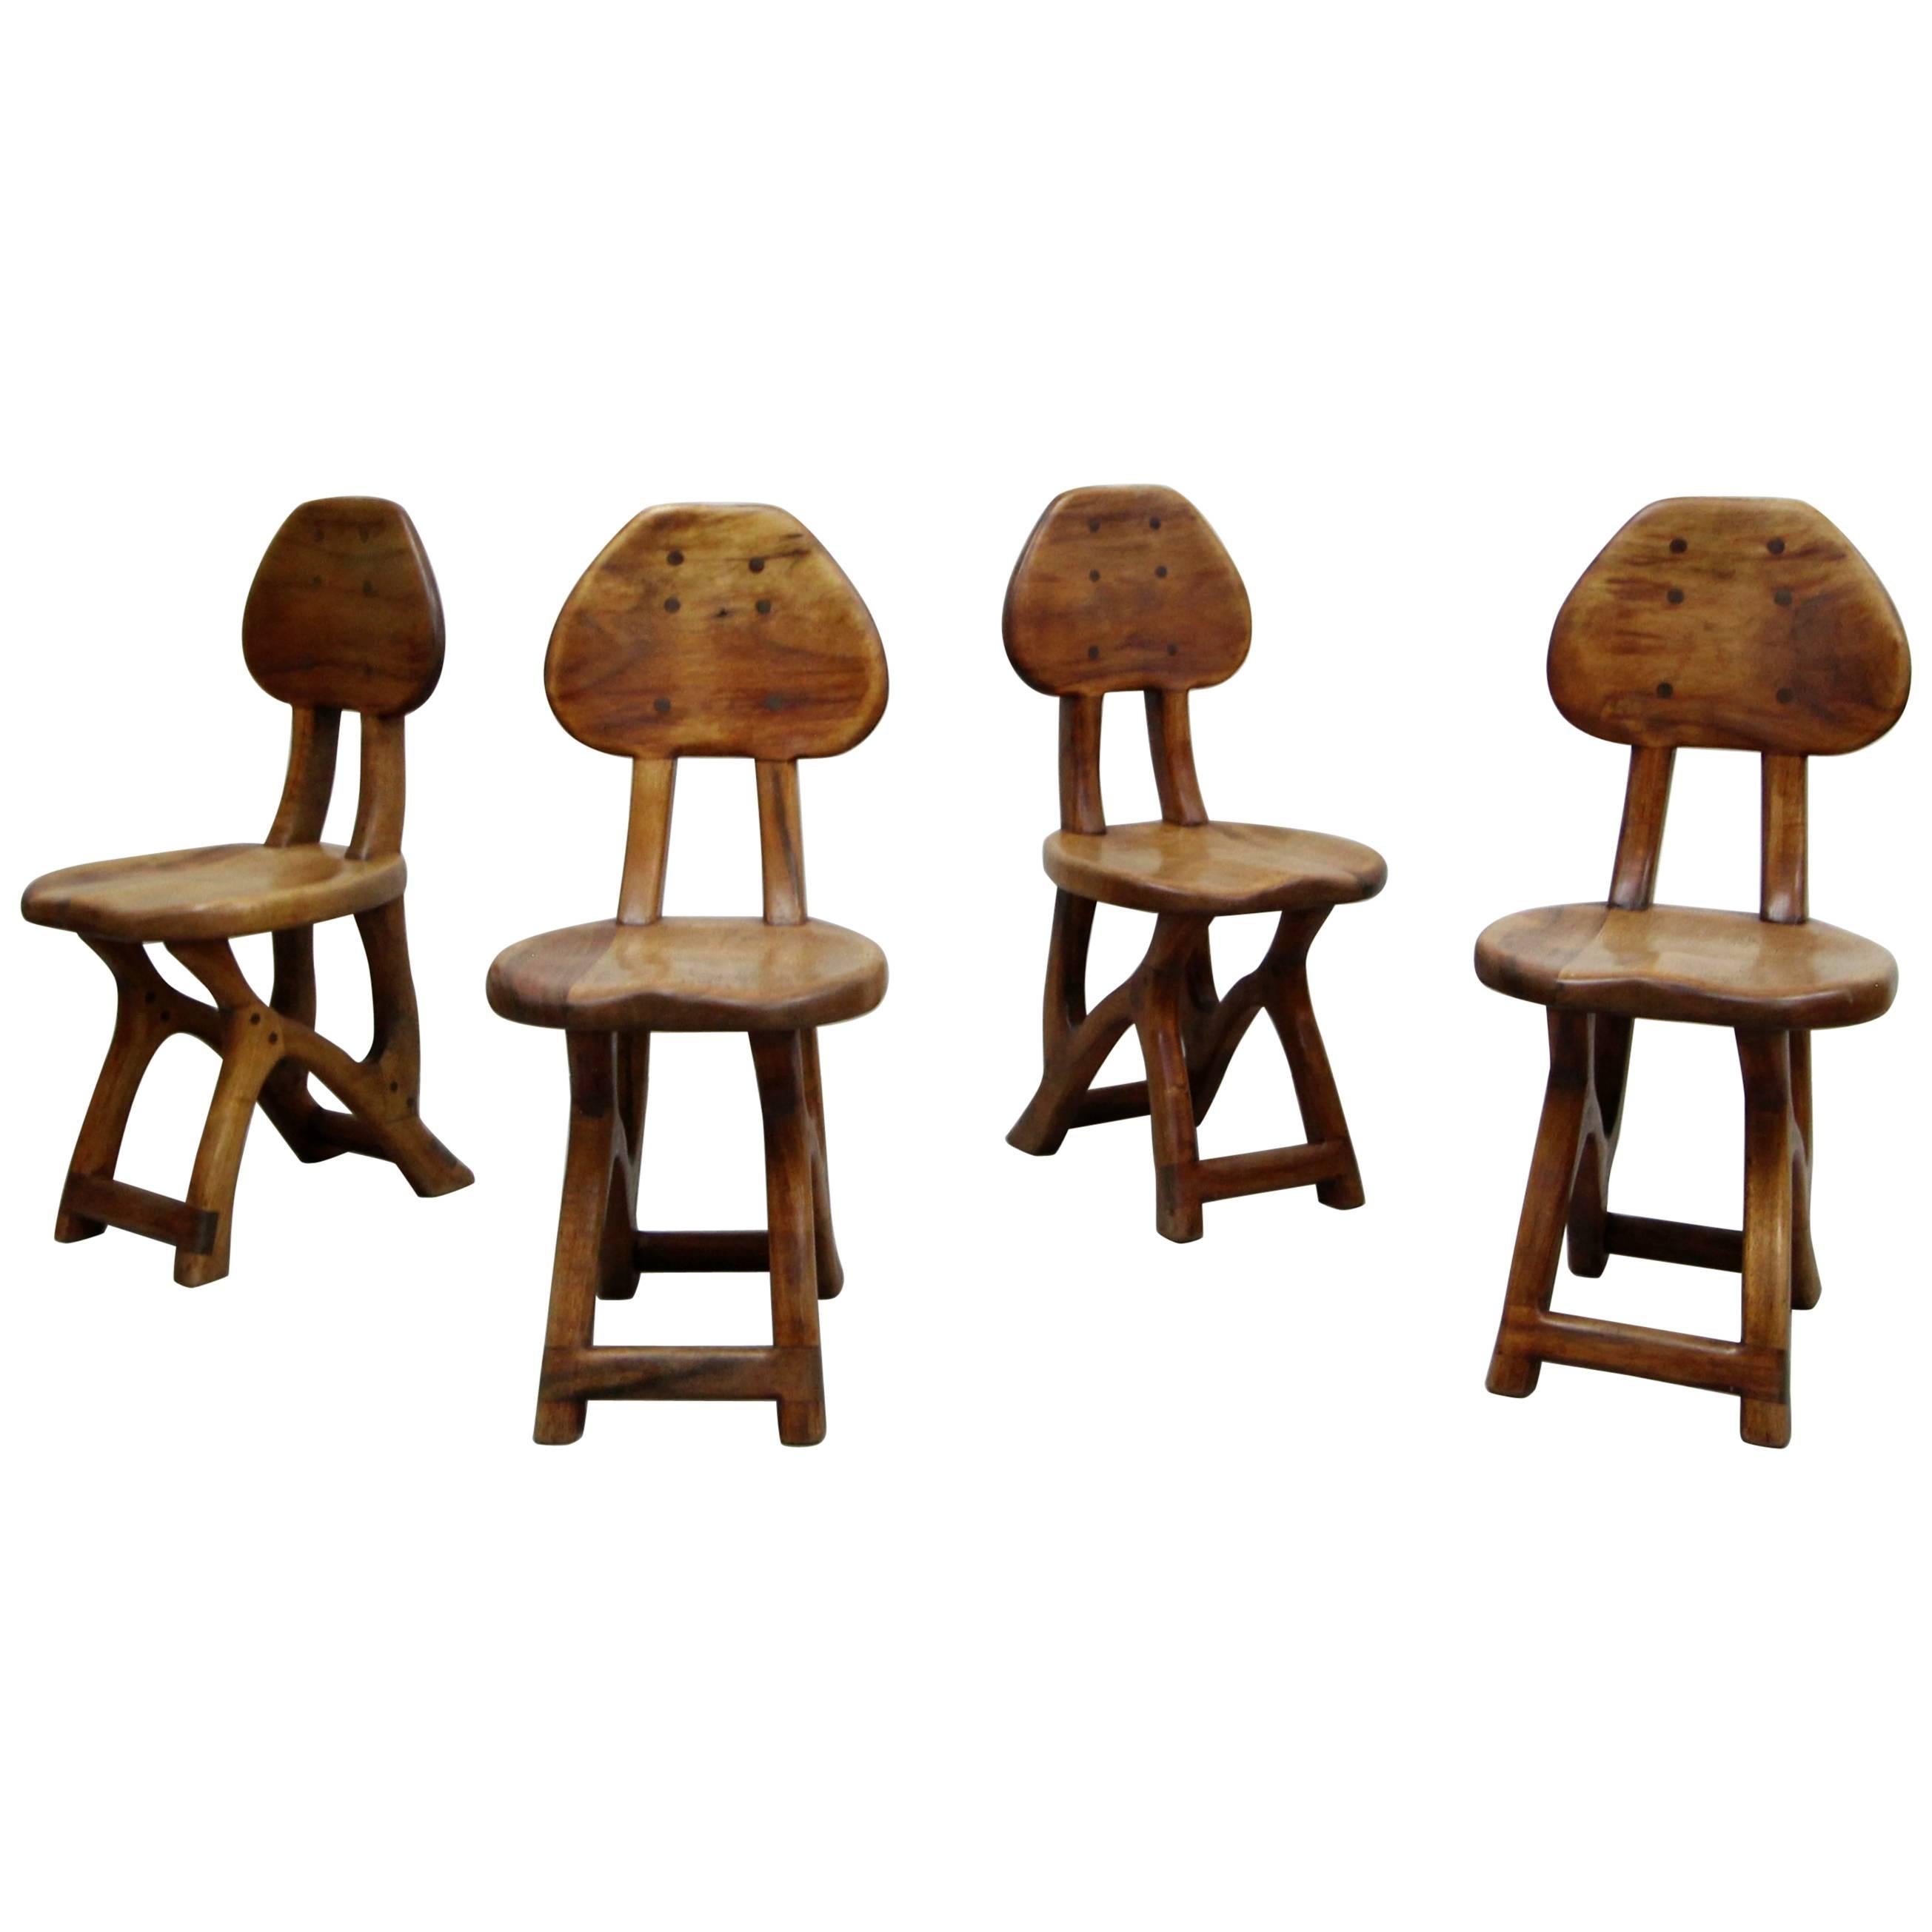 Set of 4 California Modern Studio Craft Primitive Wood Chairs by Chuck Burdick